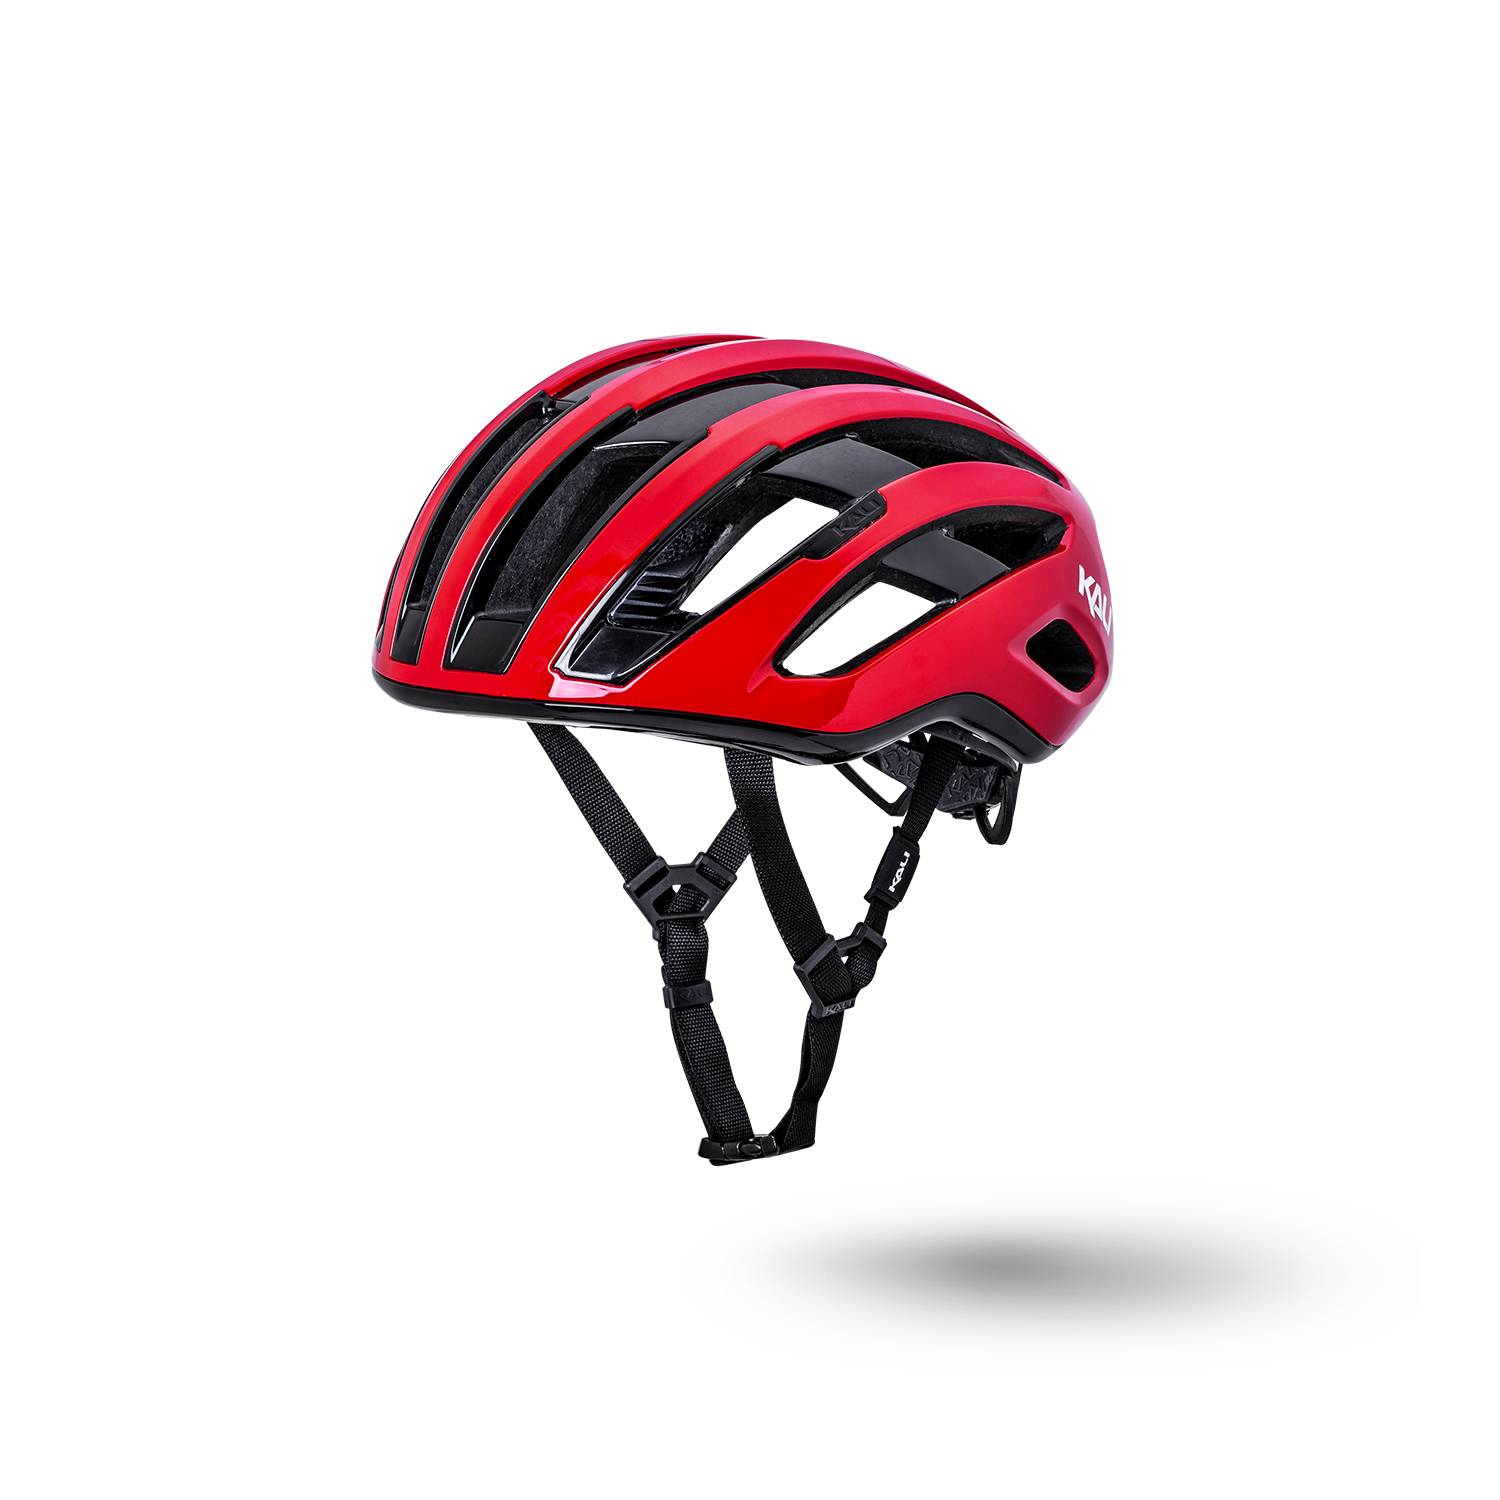 Grit 2.0 Bike Helmet from Kali Protectives